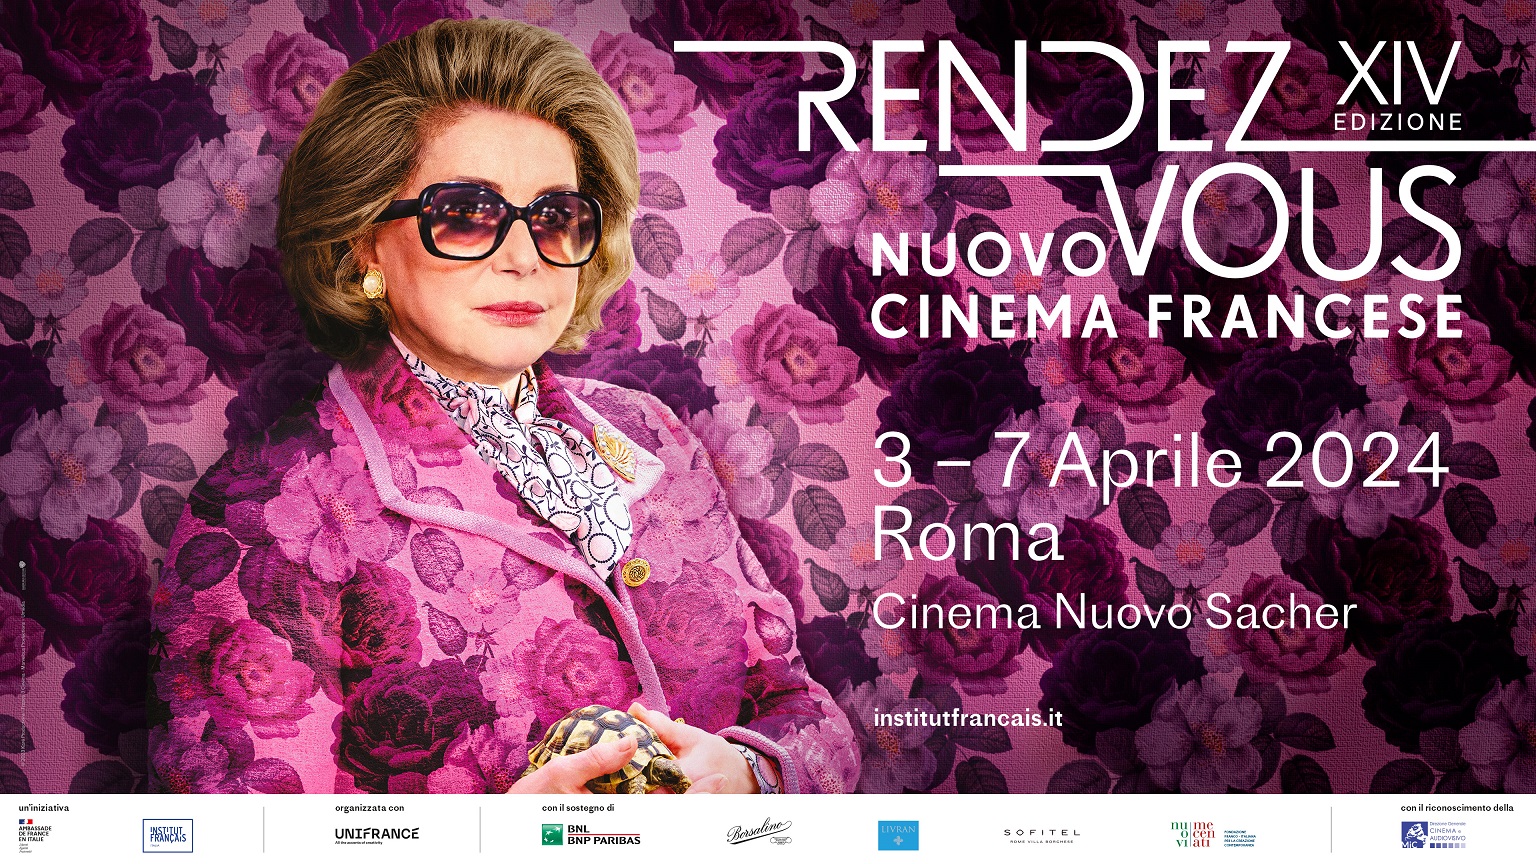 RENDEZ-VOUS CINEMA FRANCESE: tutto il programma dal 3 al 7 aprile a Roma